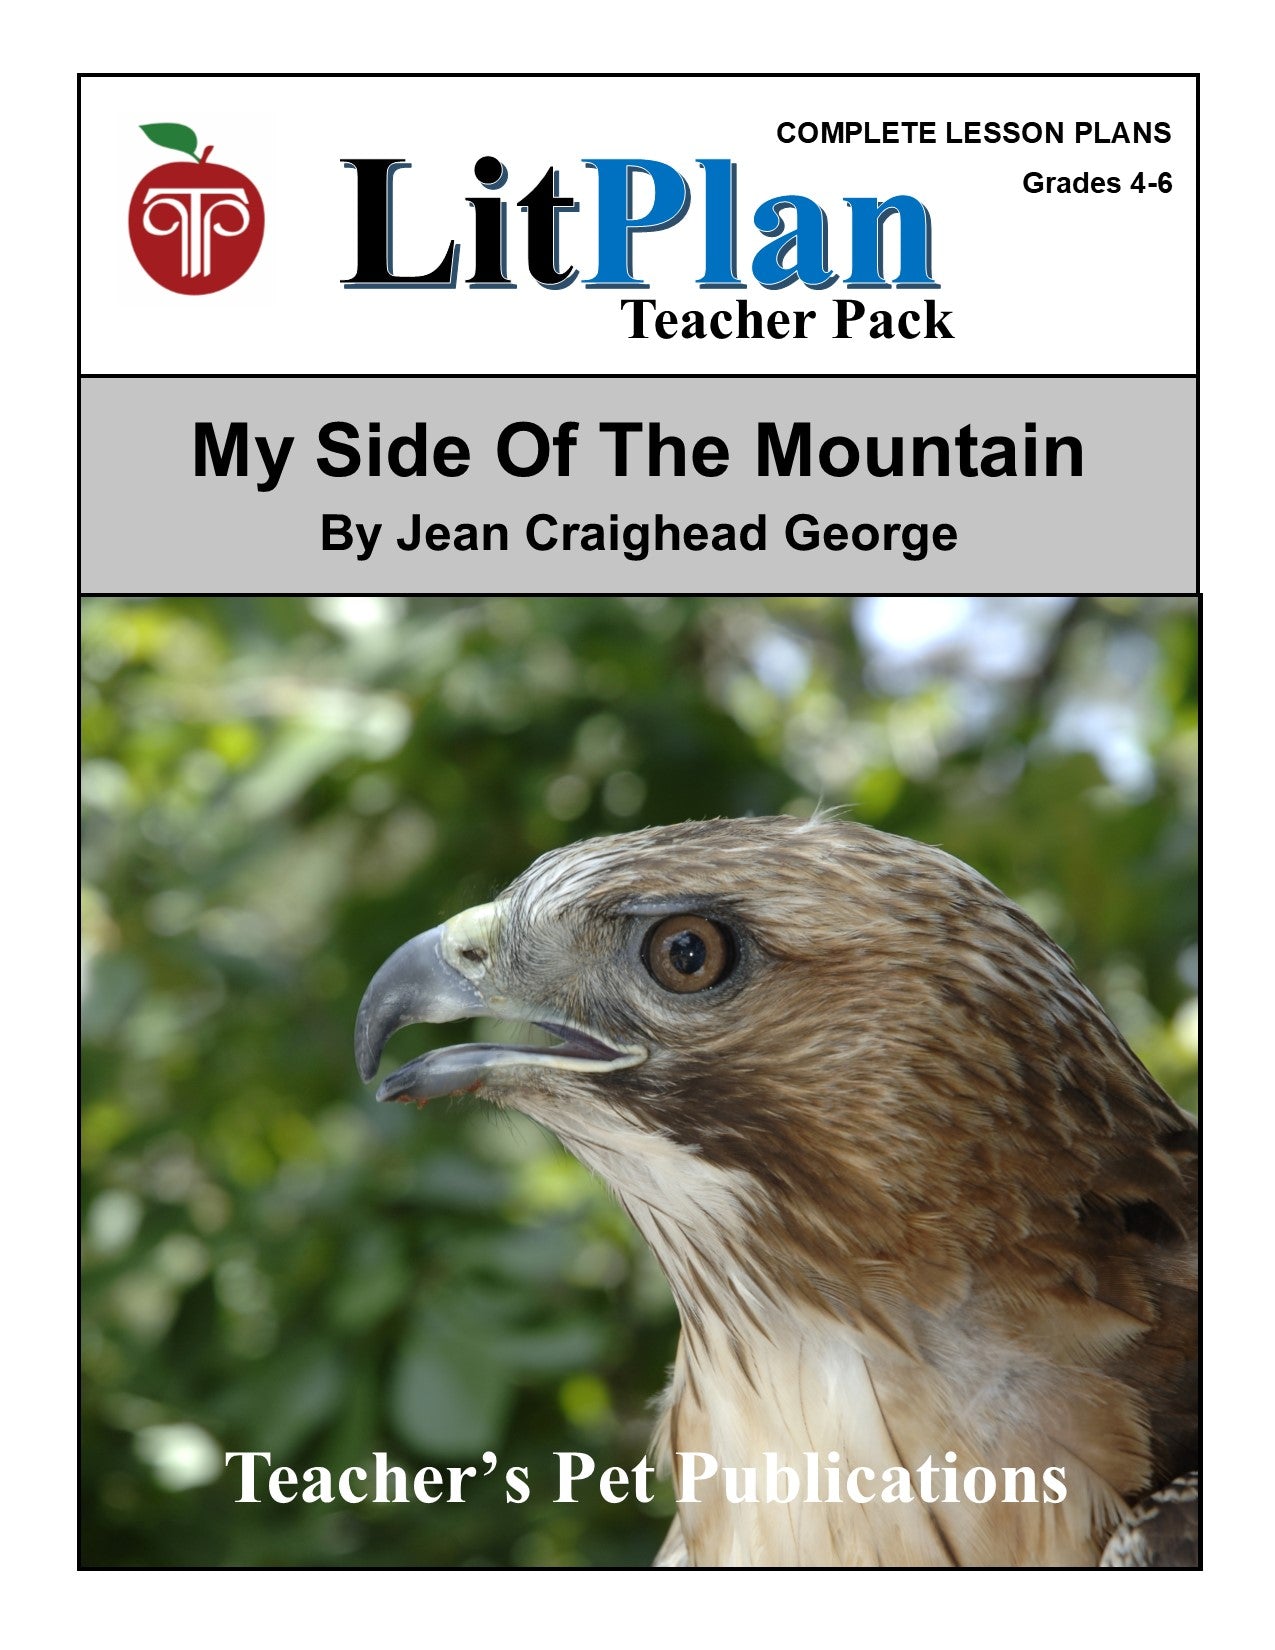 My Side of the Mountain: LitPlan Teacher Pack Grades 4-6